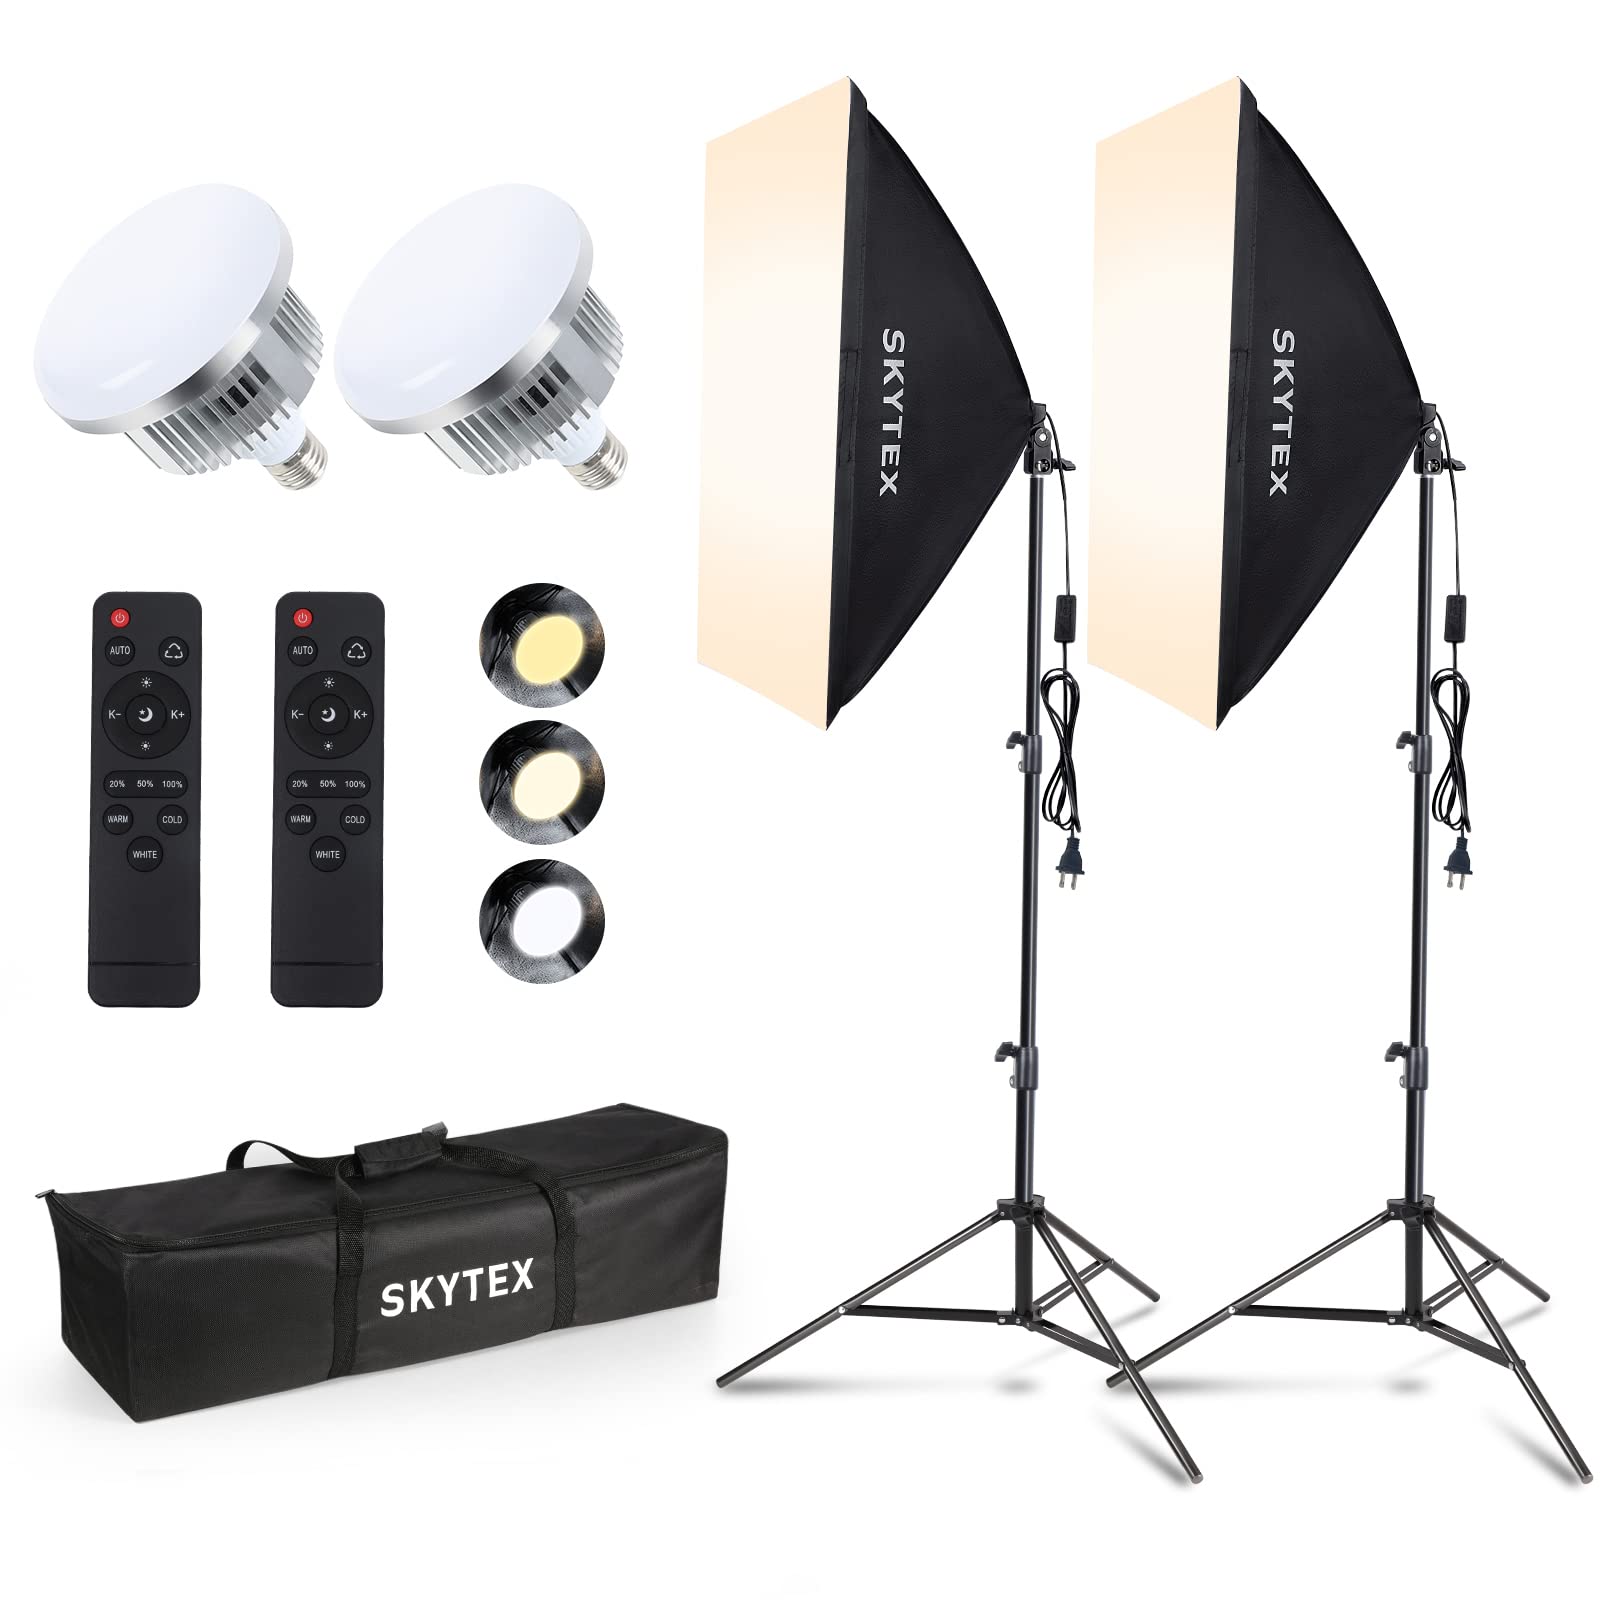 Kit de iluminación Softbox, kit de iluminación de fotografía continua Skytex con caja blanda de 2 x 20 x 28 pulgadas, 2 bombillas LED E27 de 85 W 2700-6400K, equipo de luces de estudio fotográfico para fotografía de cámara, grabación de video..